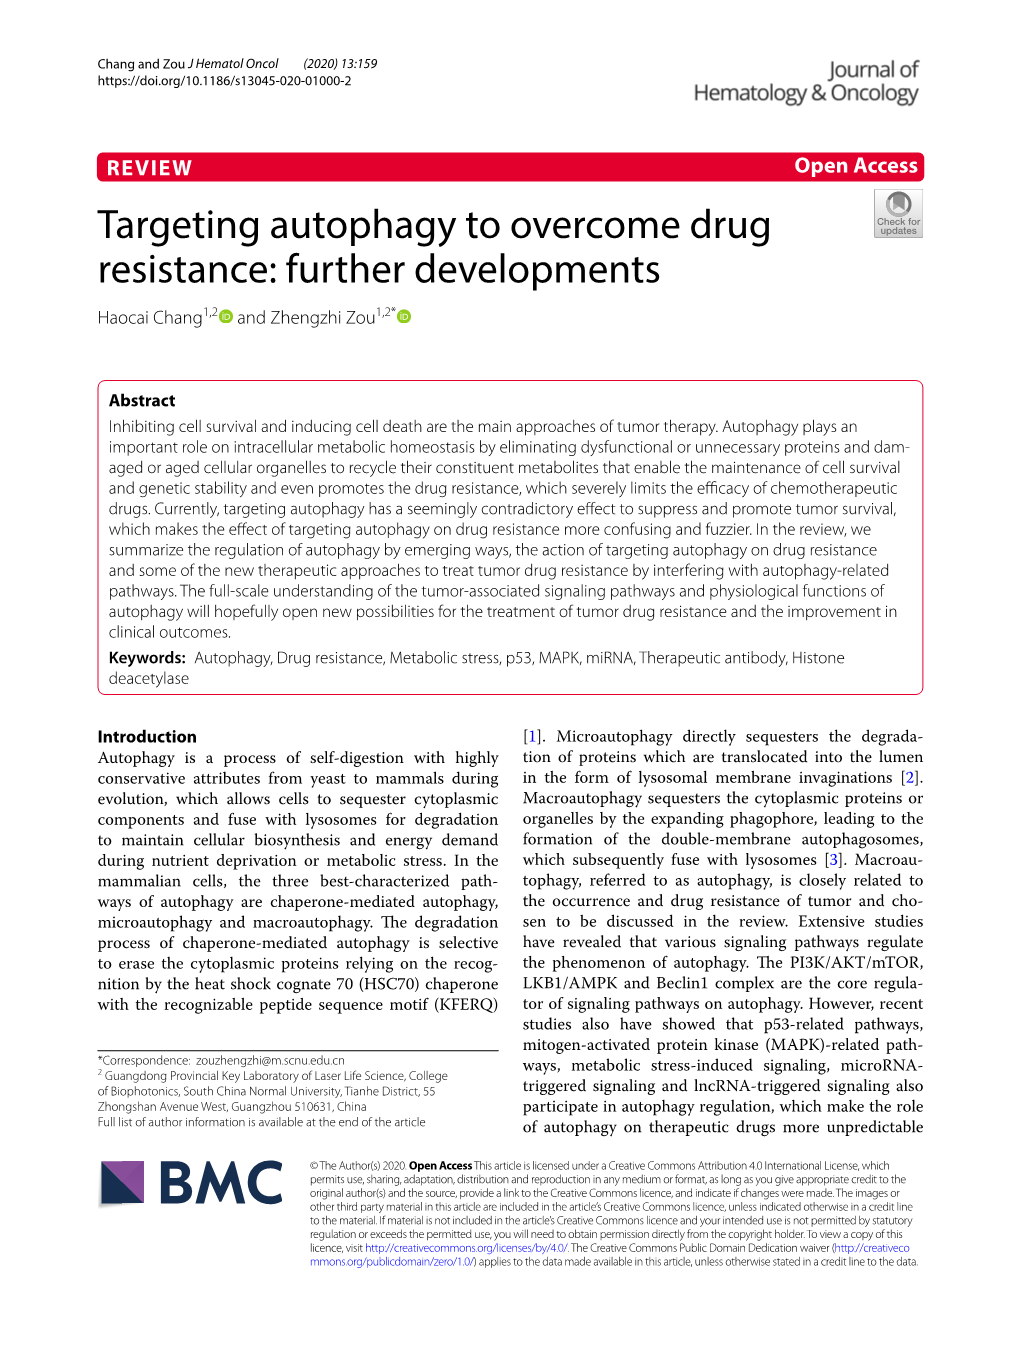 Targeting Autophagy to Overcome Drug Resistance: Further Developments Haocai Chang1,2 and Zhengzhi Zou1,2*